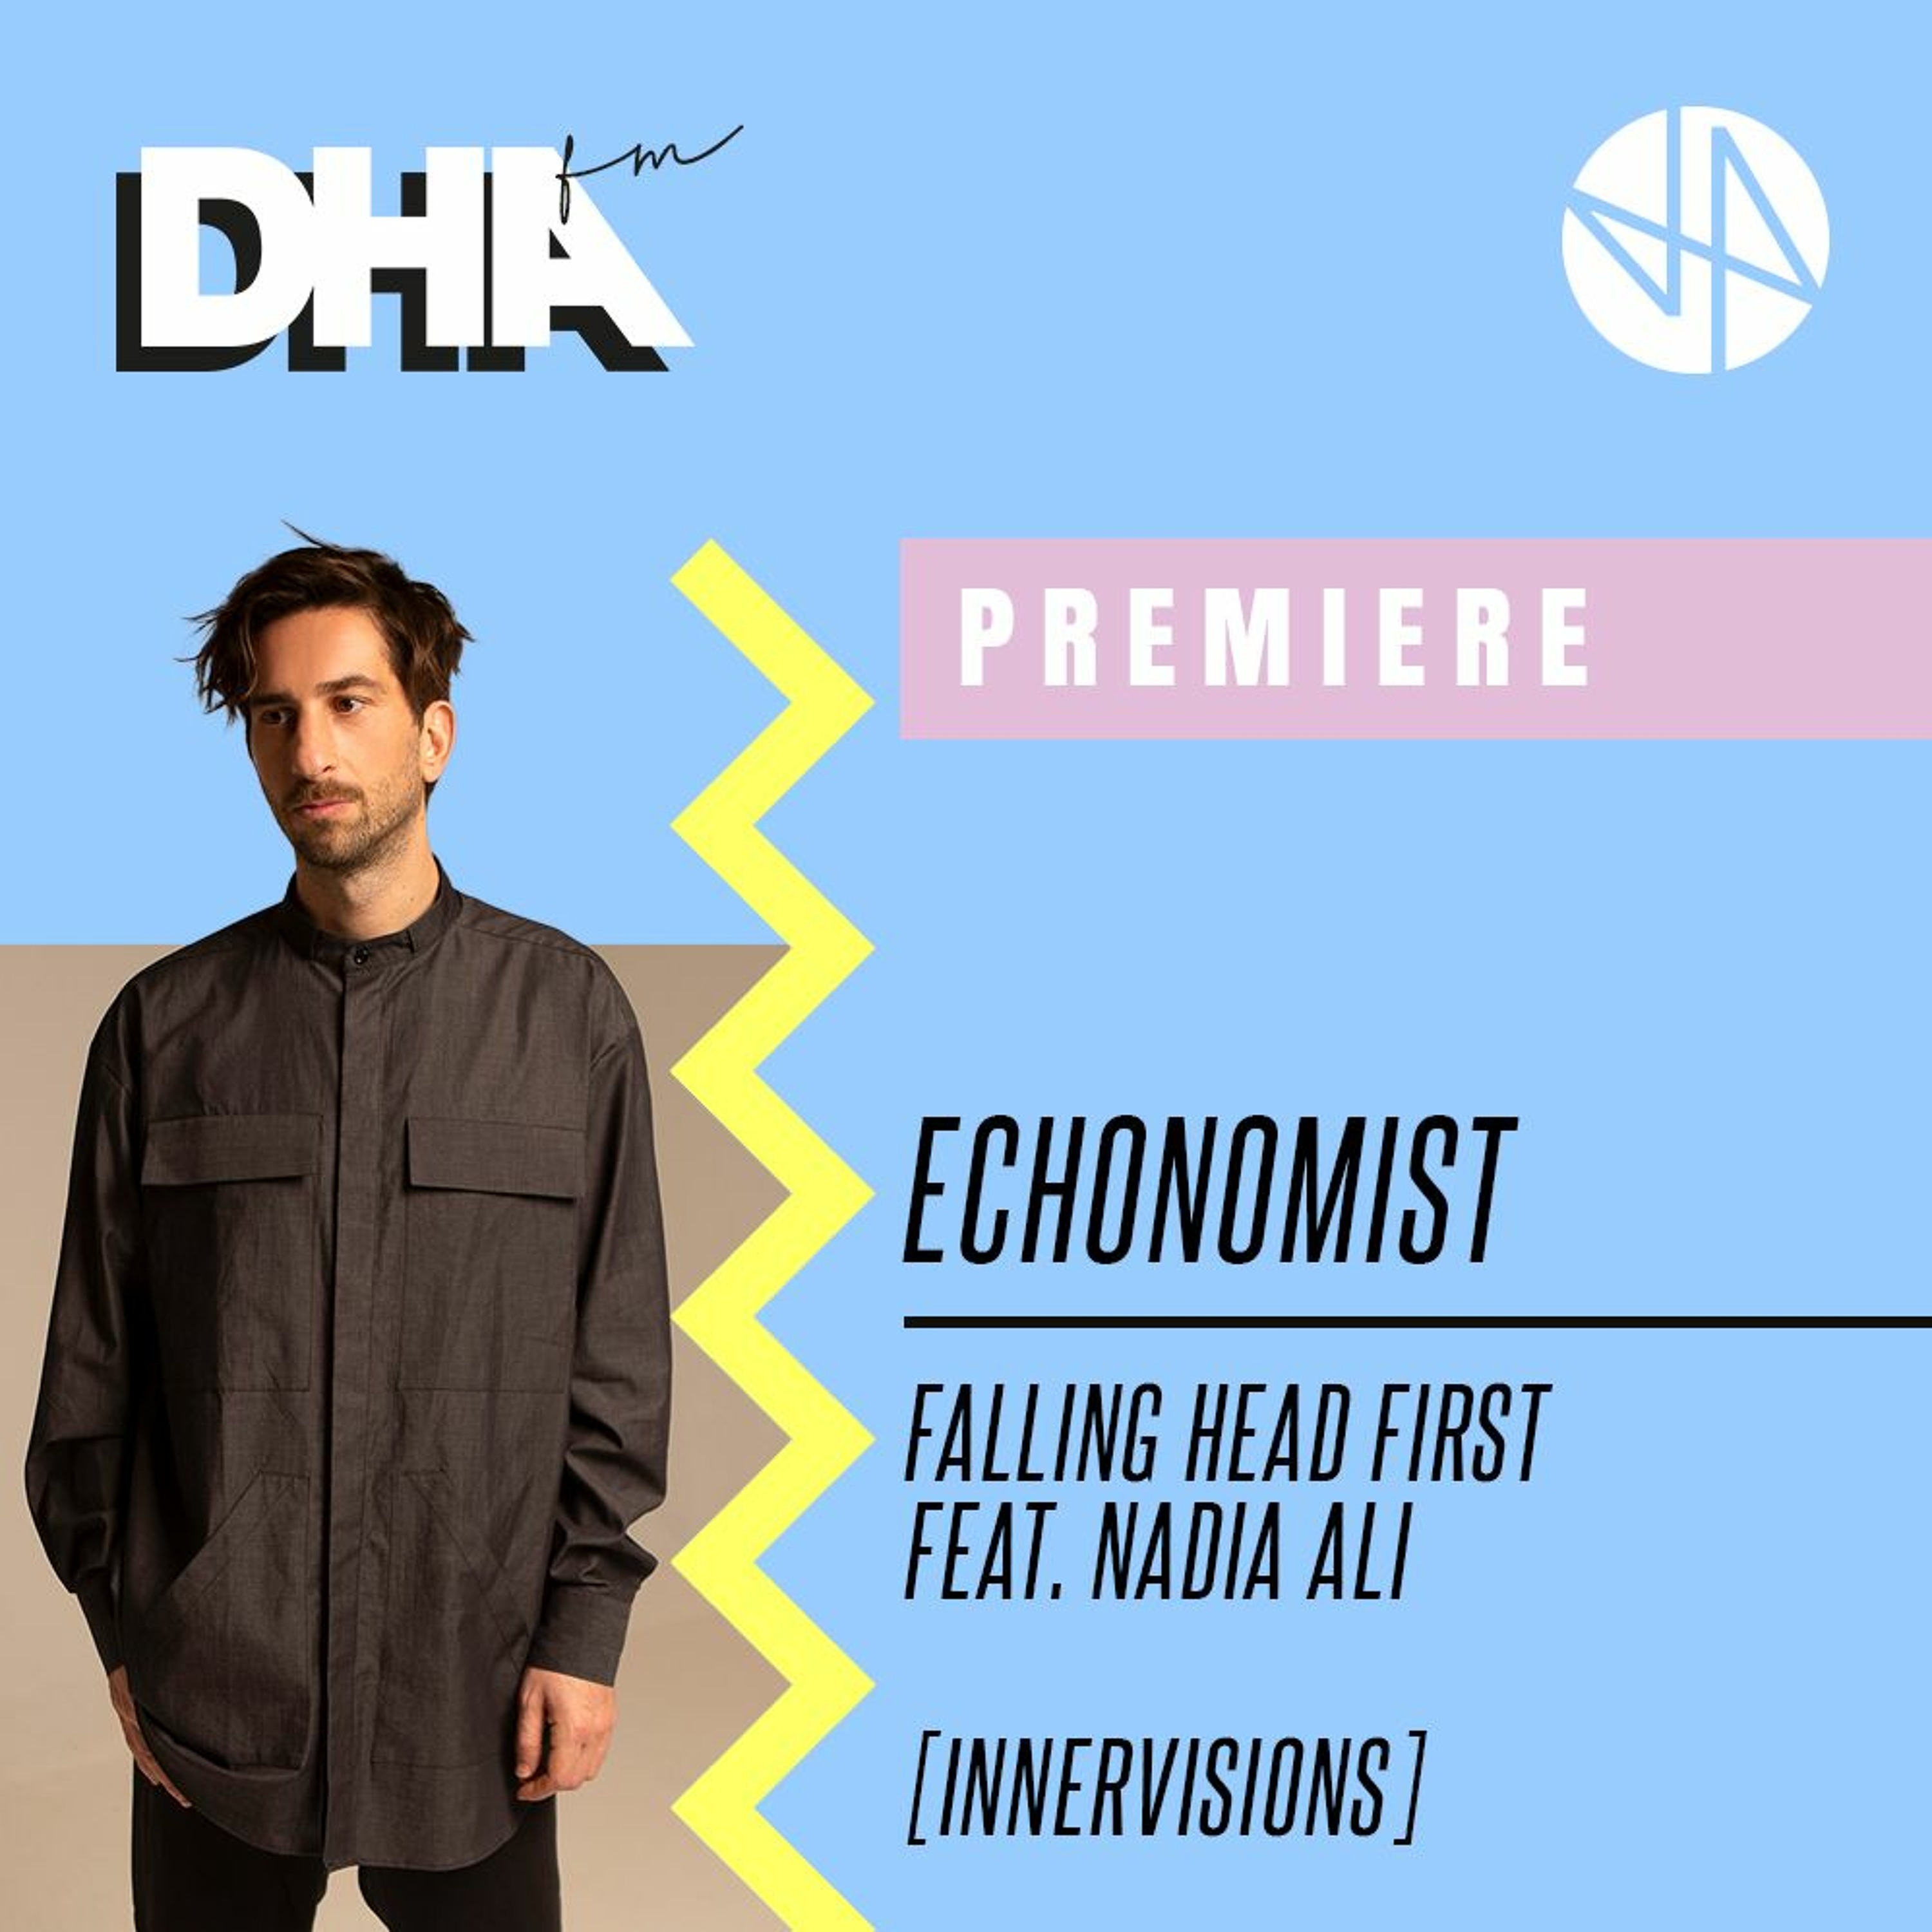 Premiere: Echonomist - Falling Head First Feat. Nadia Ali [Innvervisions]